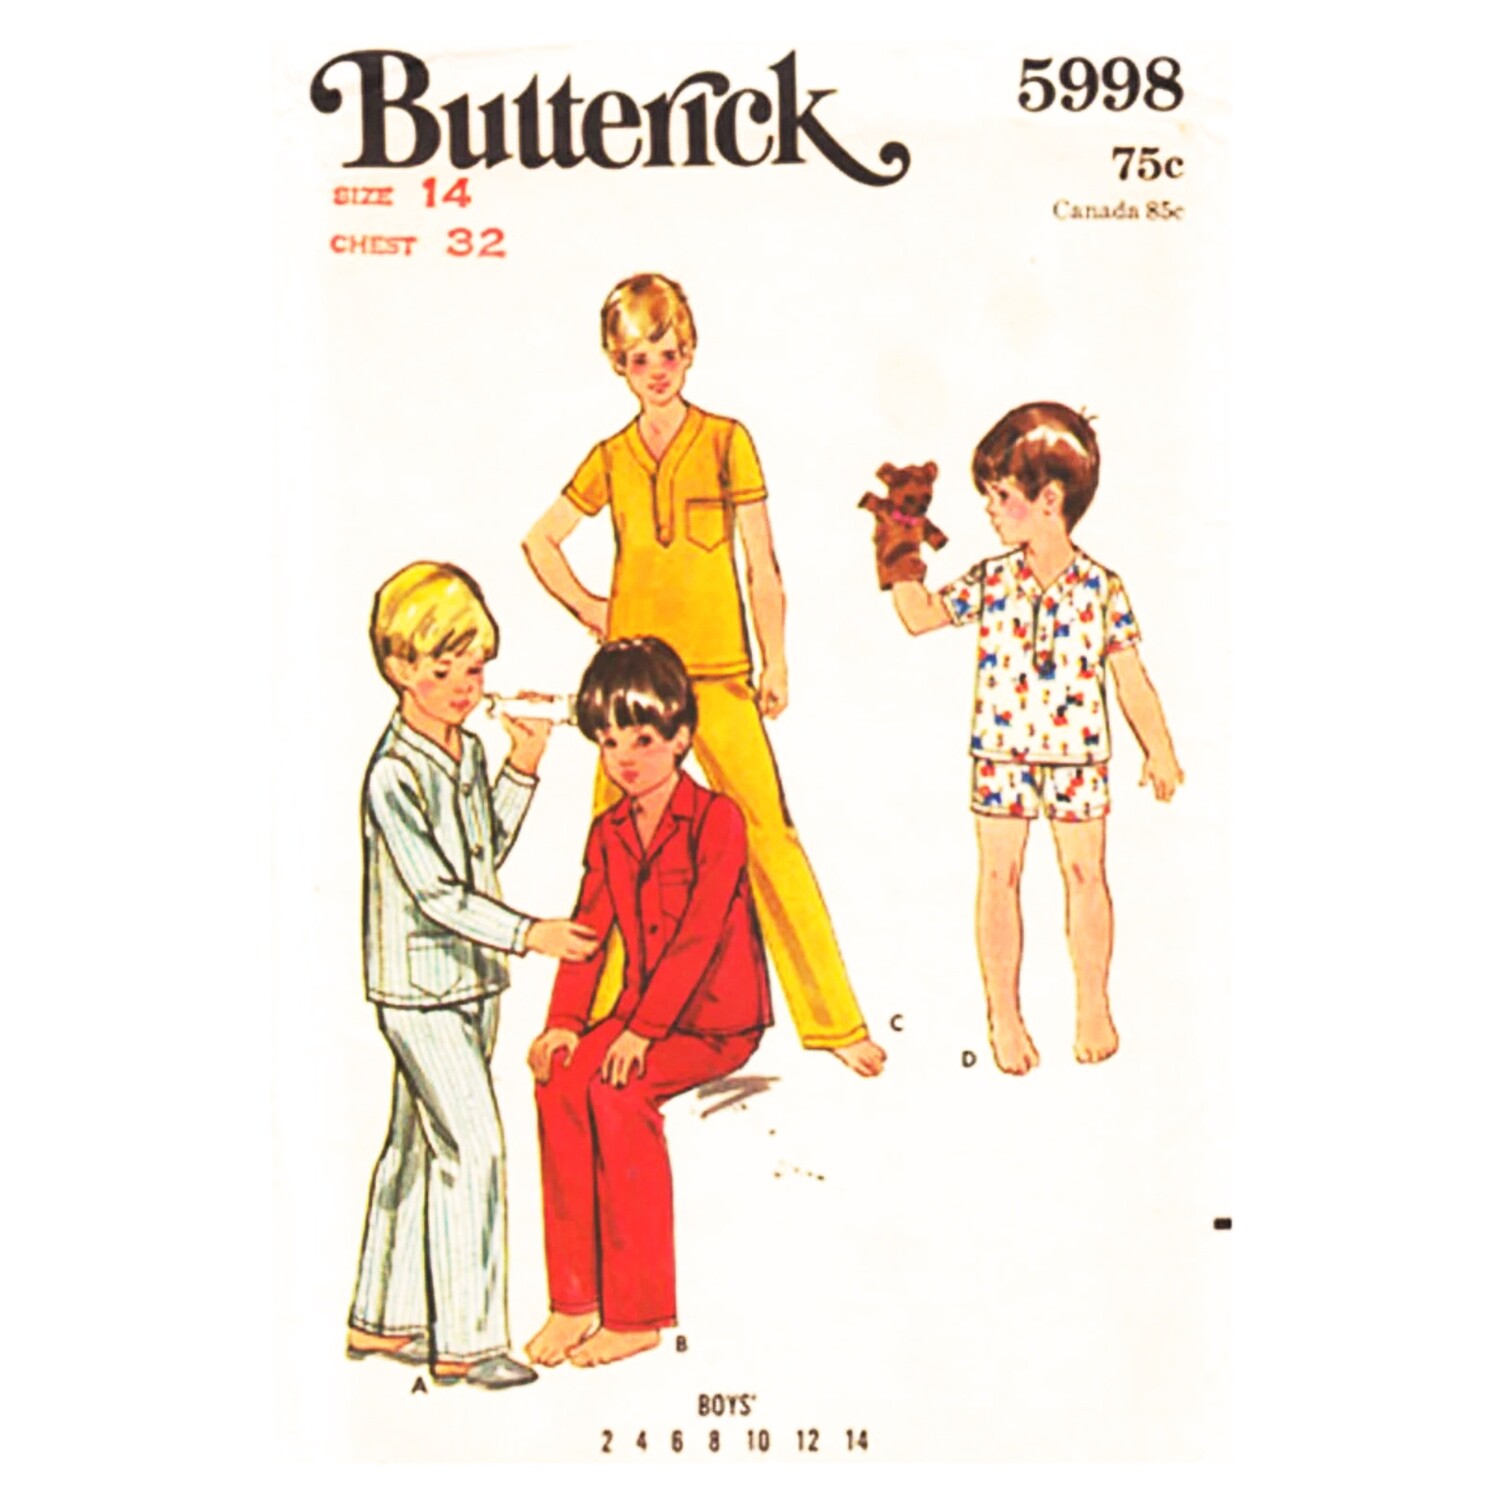 Butterick 5998 pattern